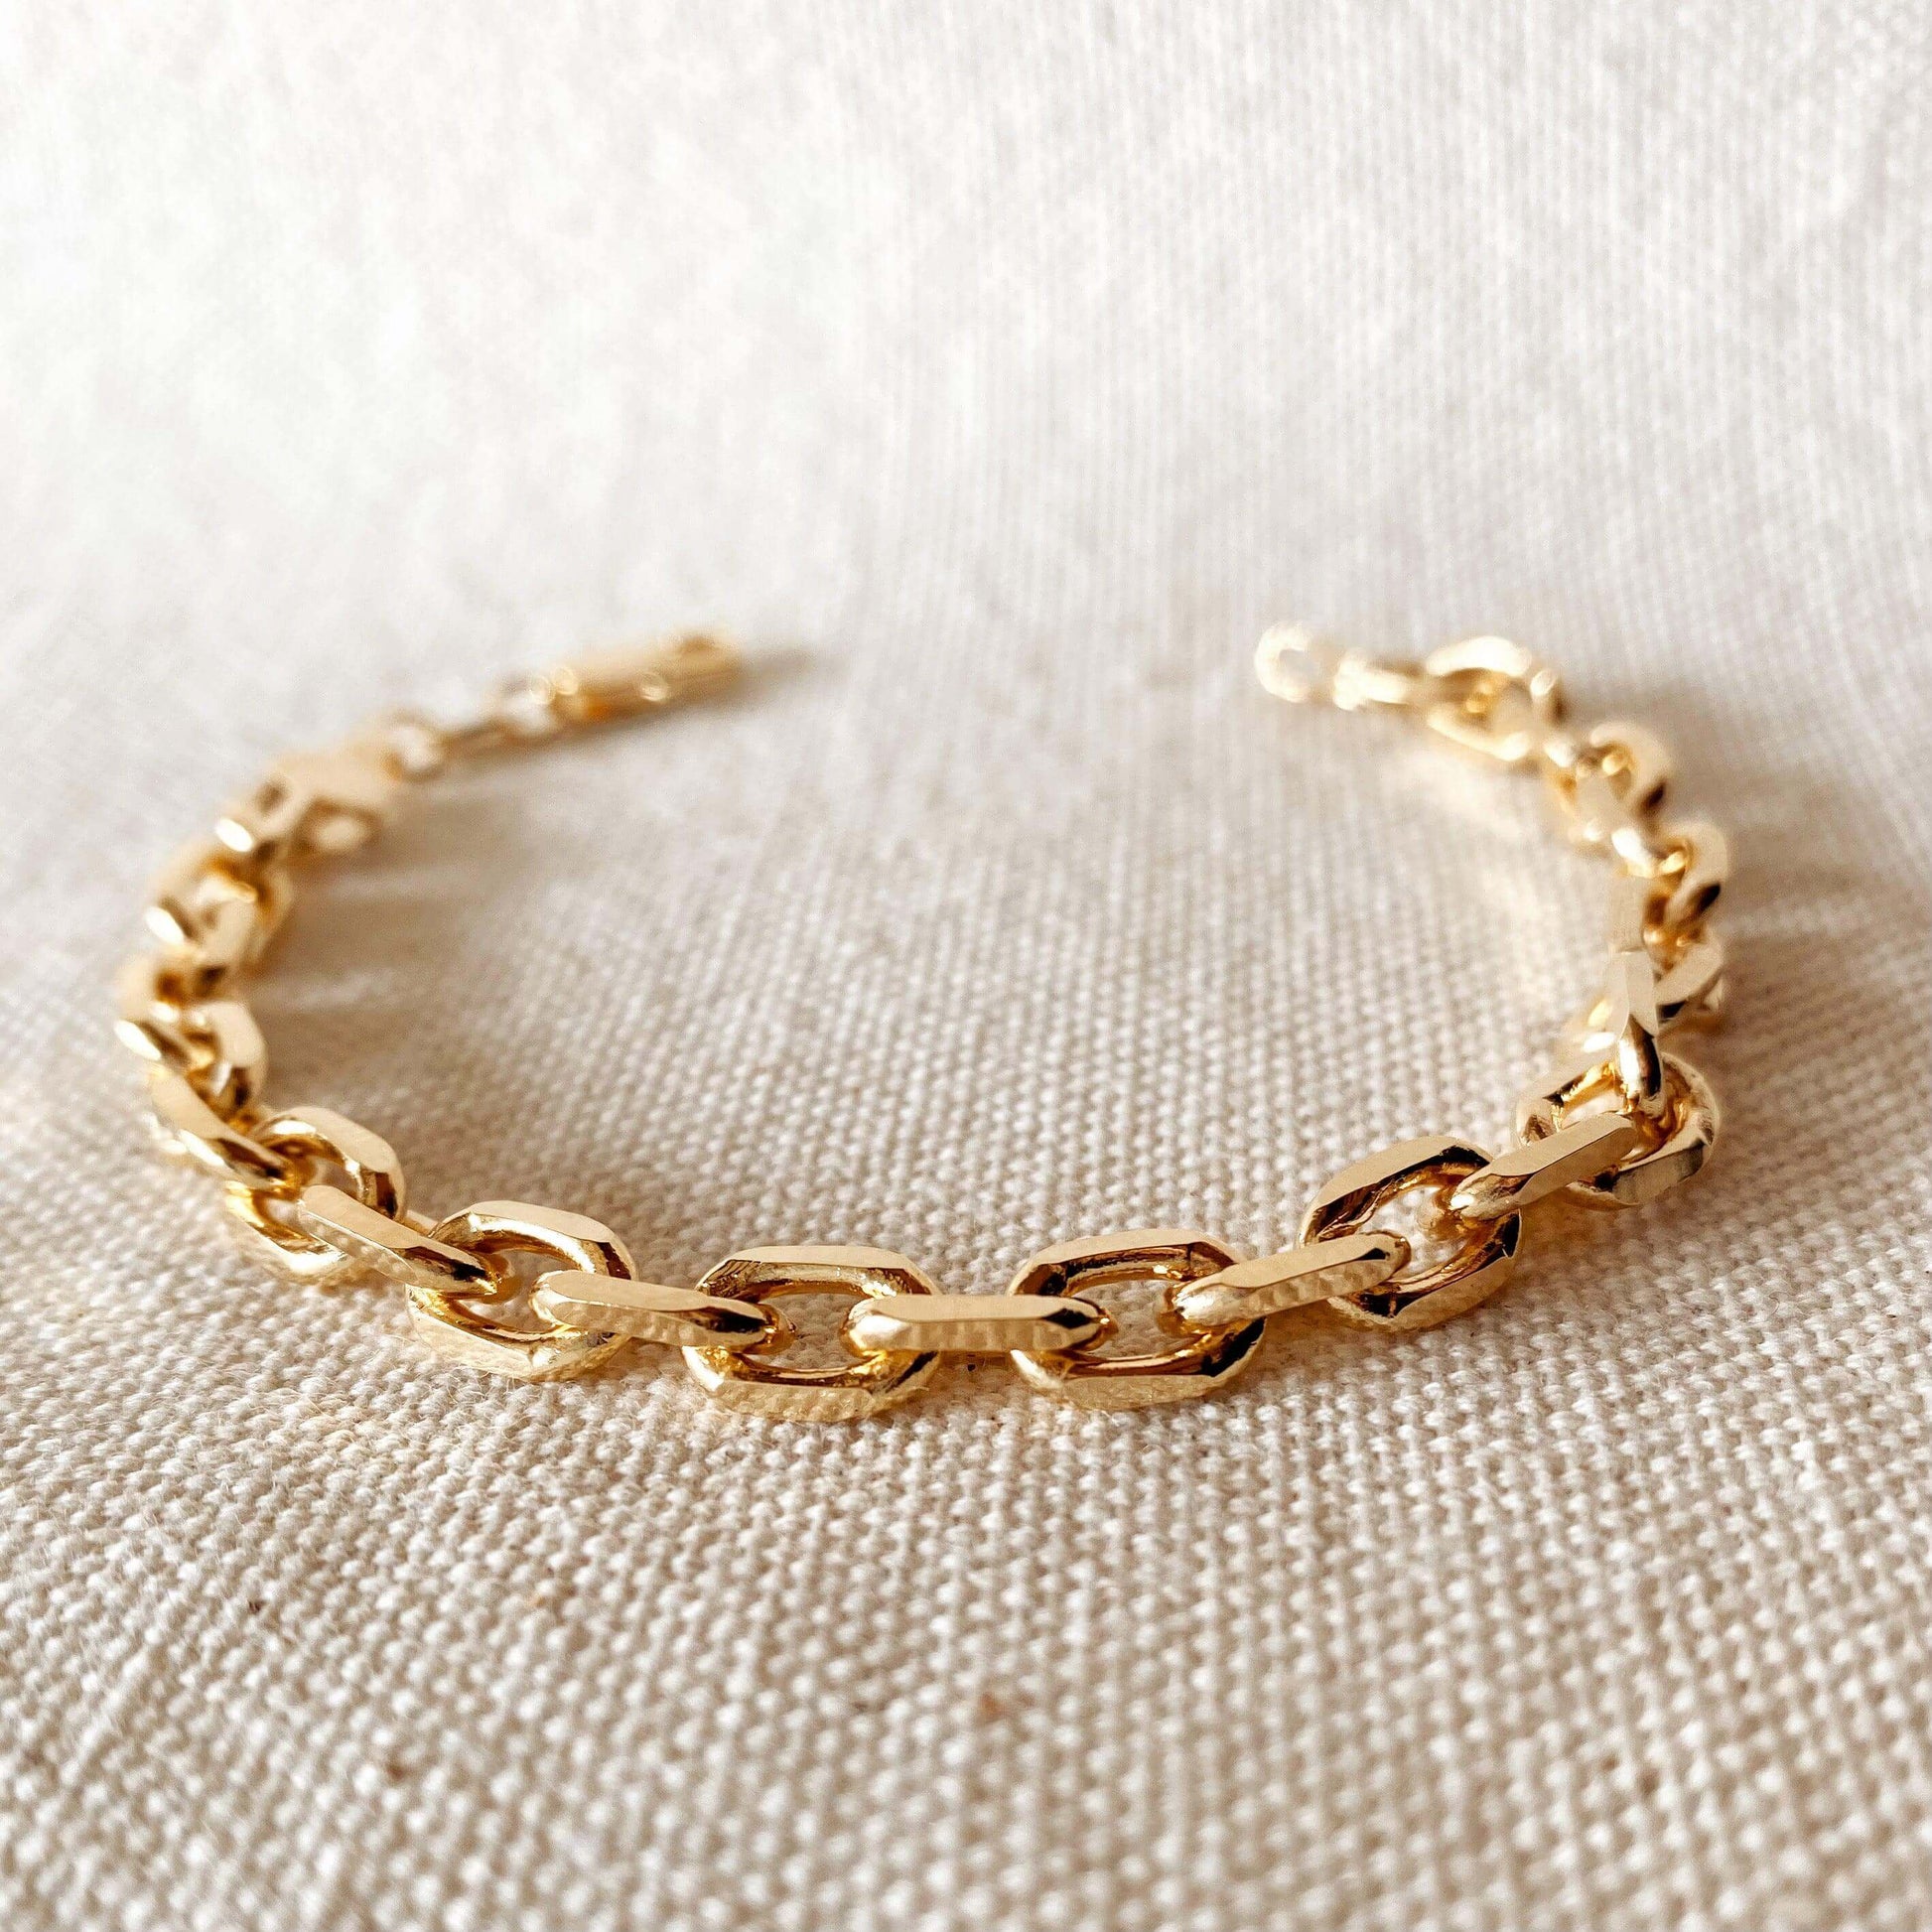 18k or 14k Solid Gold Necklace or Bracelet Extender, Removal Realsolid Gold  Link, 1 2 3 4 Inch Length Adjustable Extension Chain 